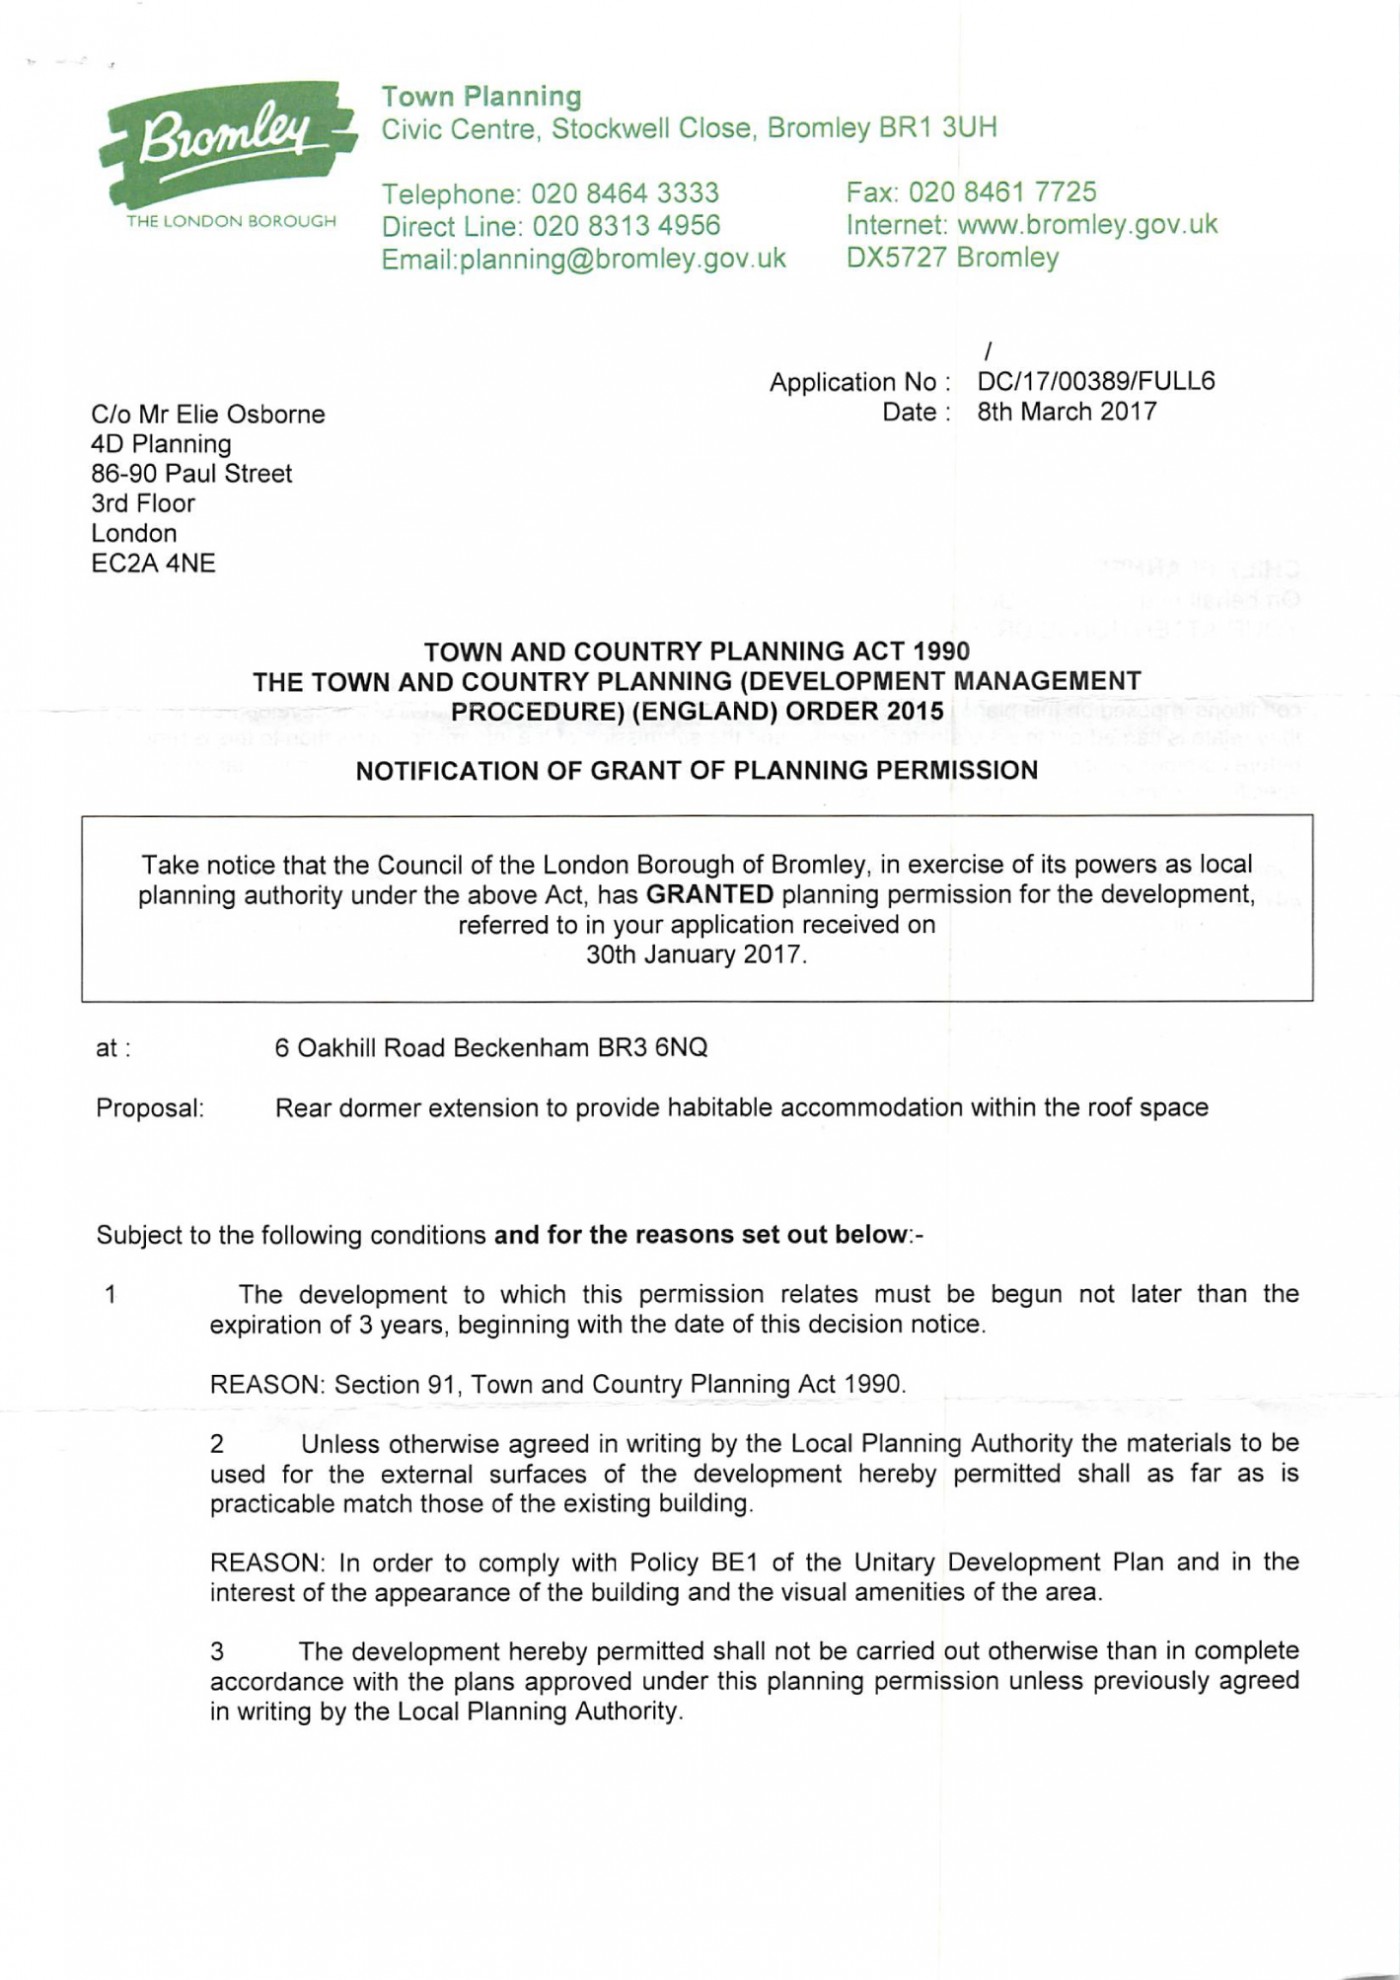 decision notice - Bromley Council